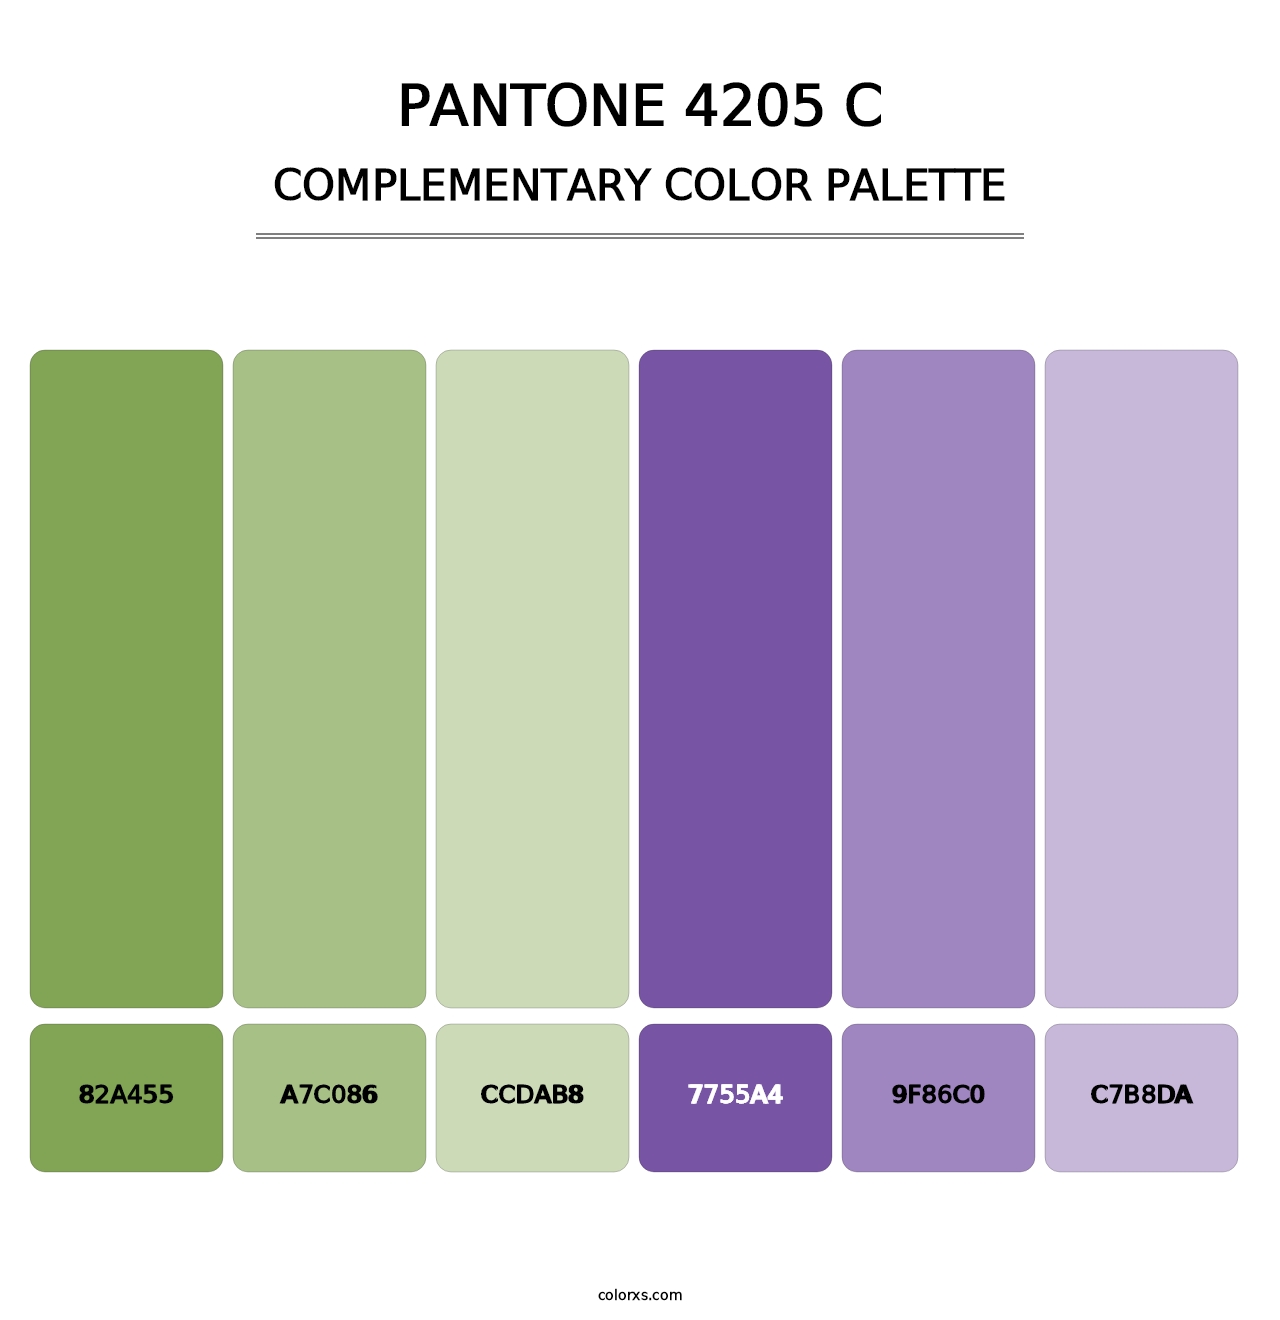 PANTONE 4205 C - Complementary Color Palette